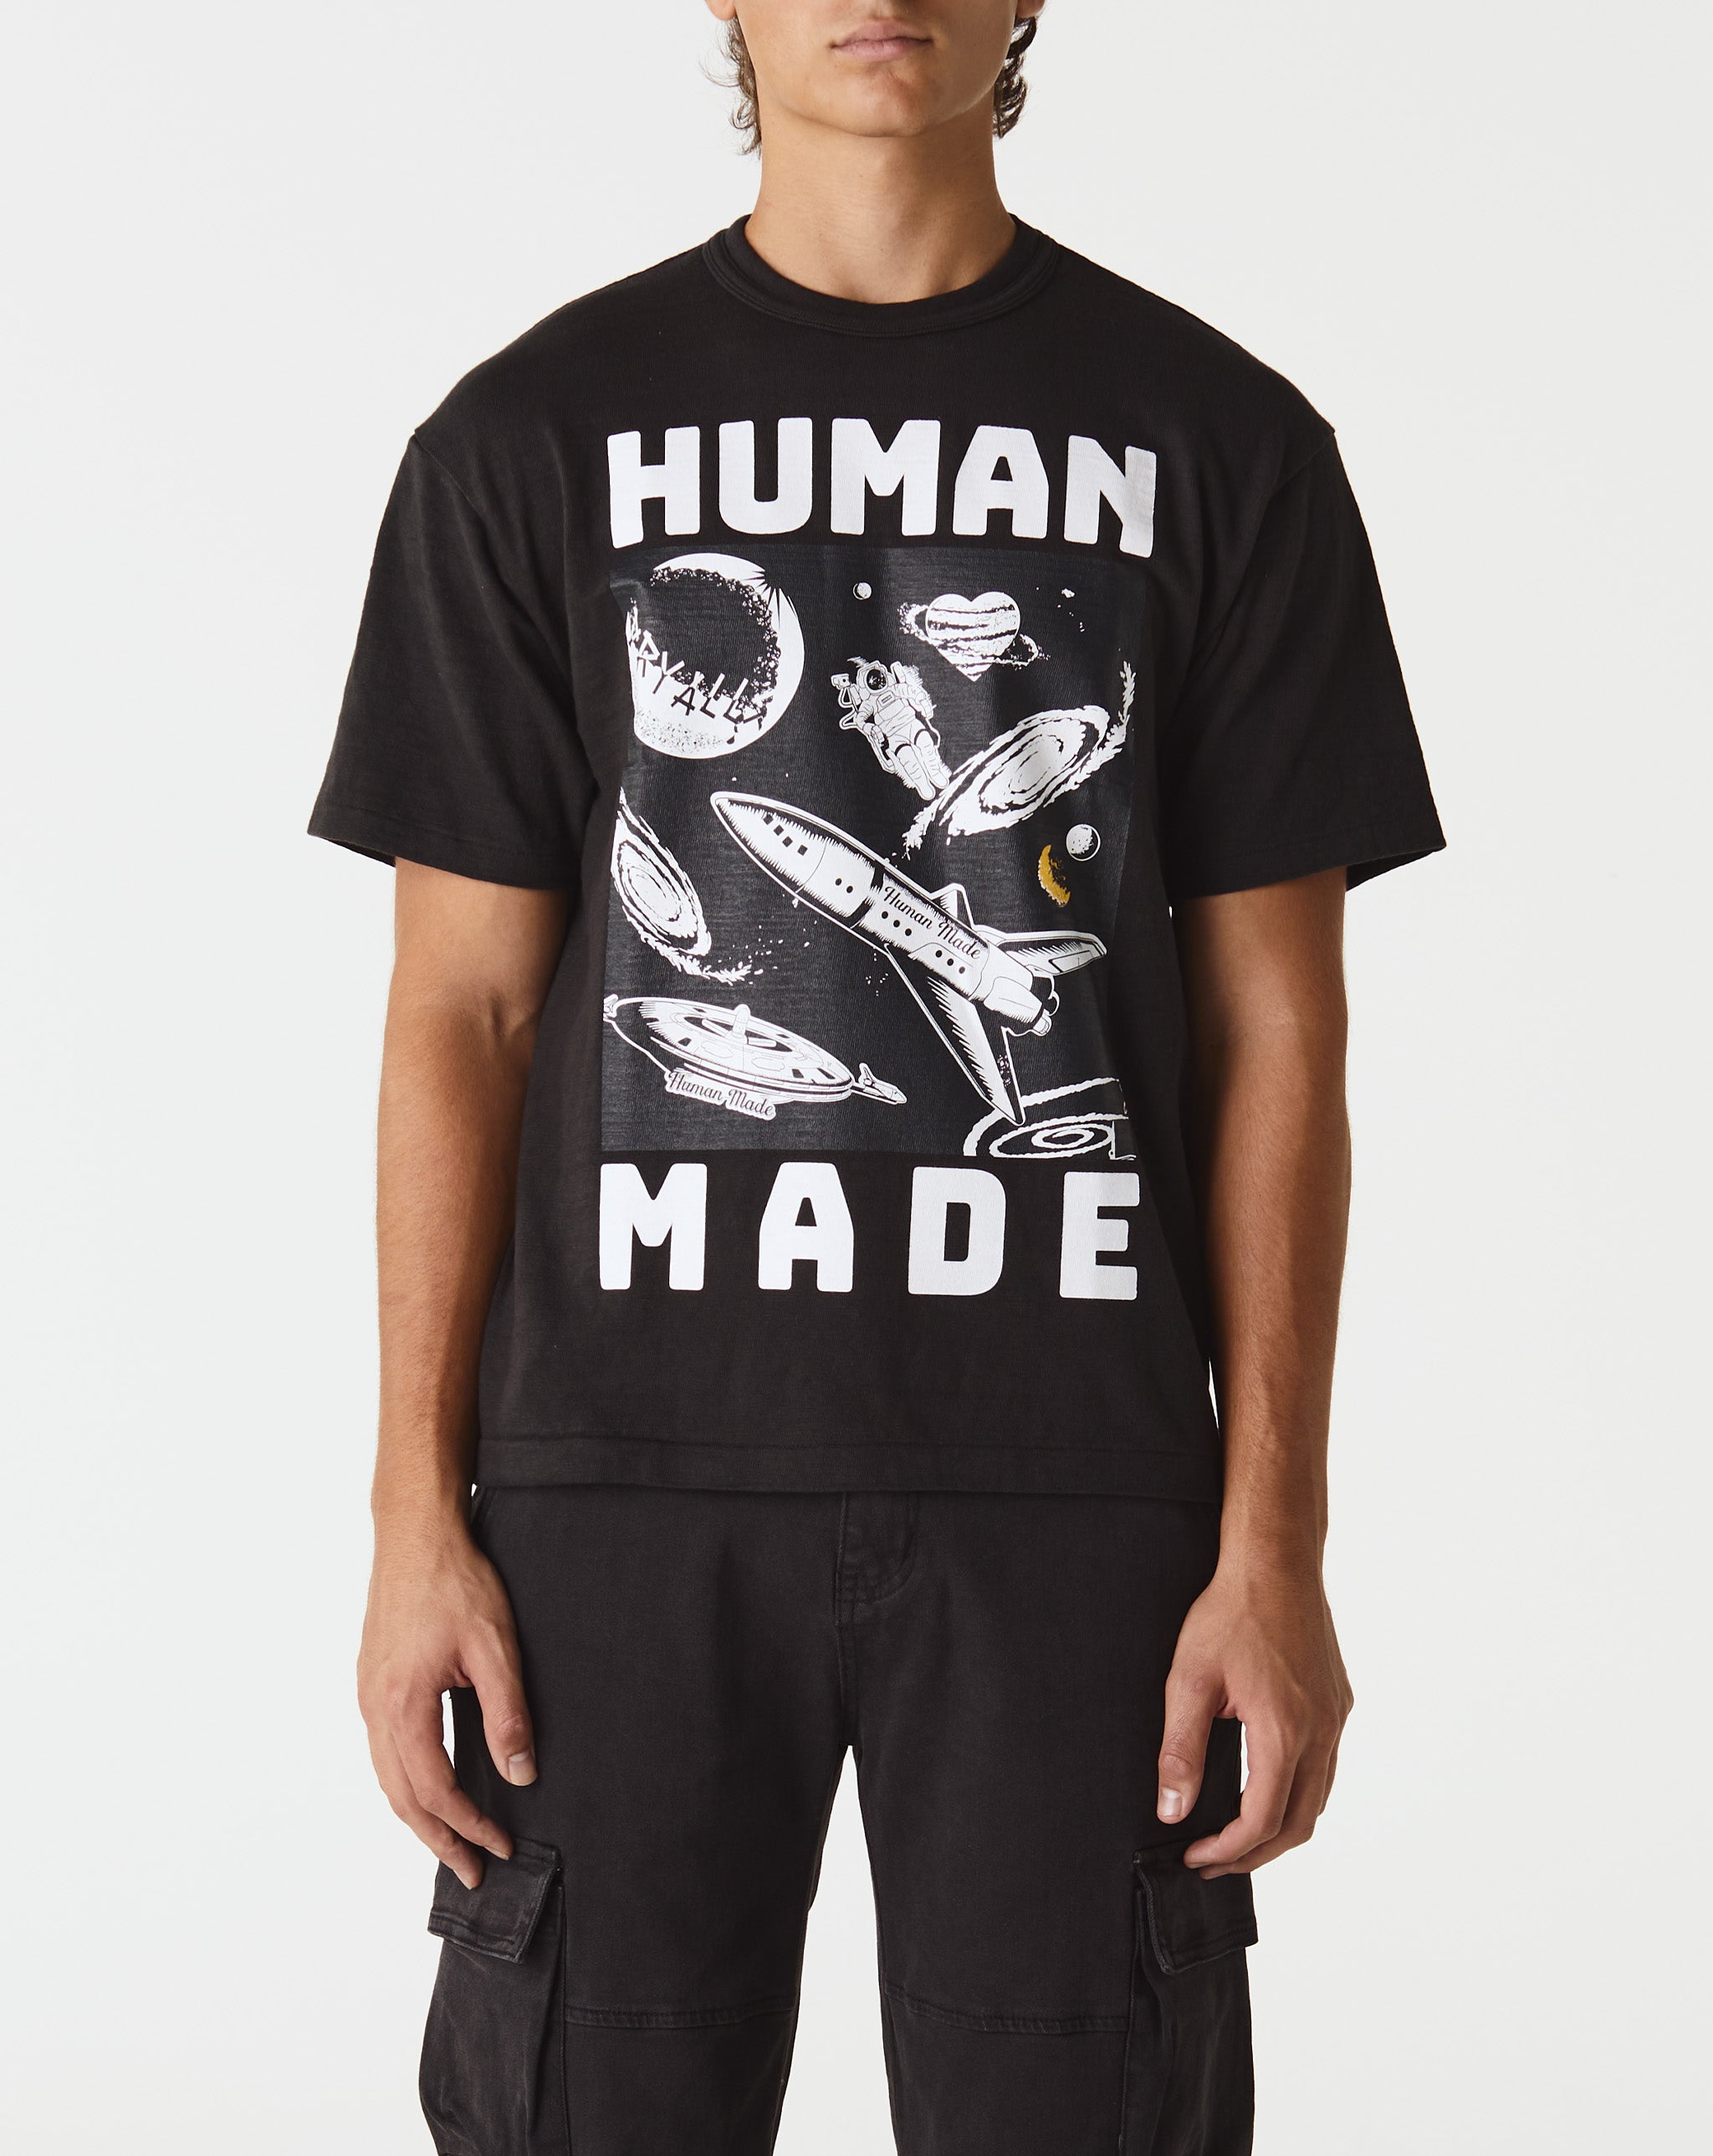 Human Made Graphic T-Shirt #14  - Cheap Cerbe Jordan outlet